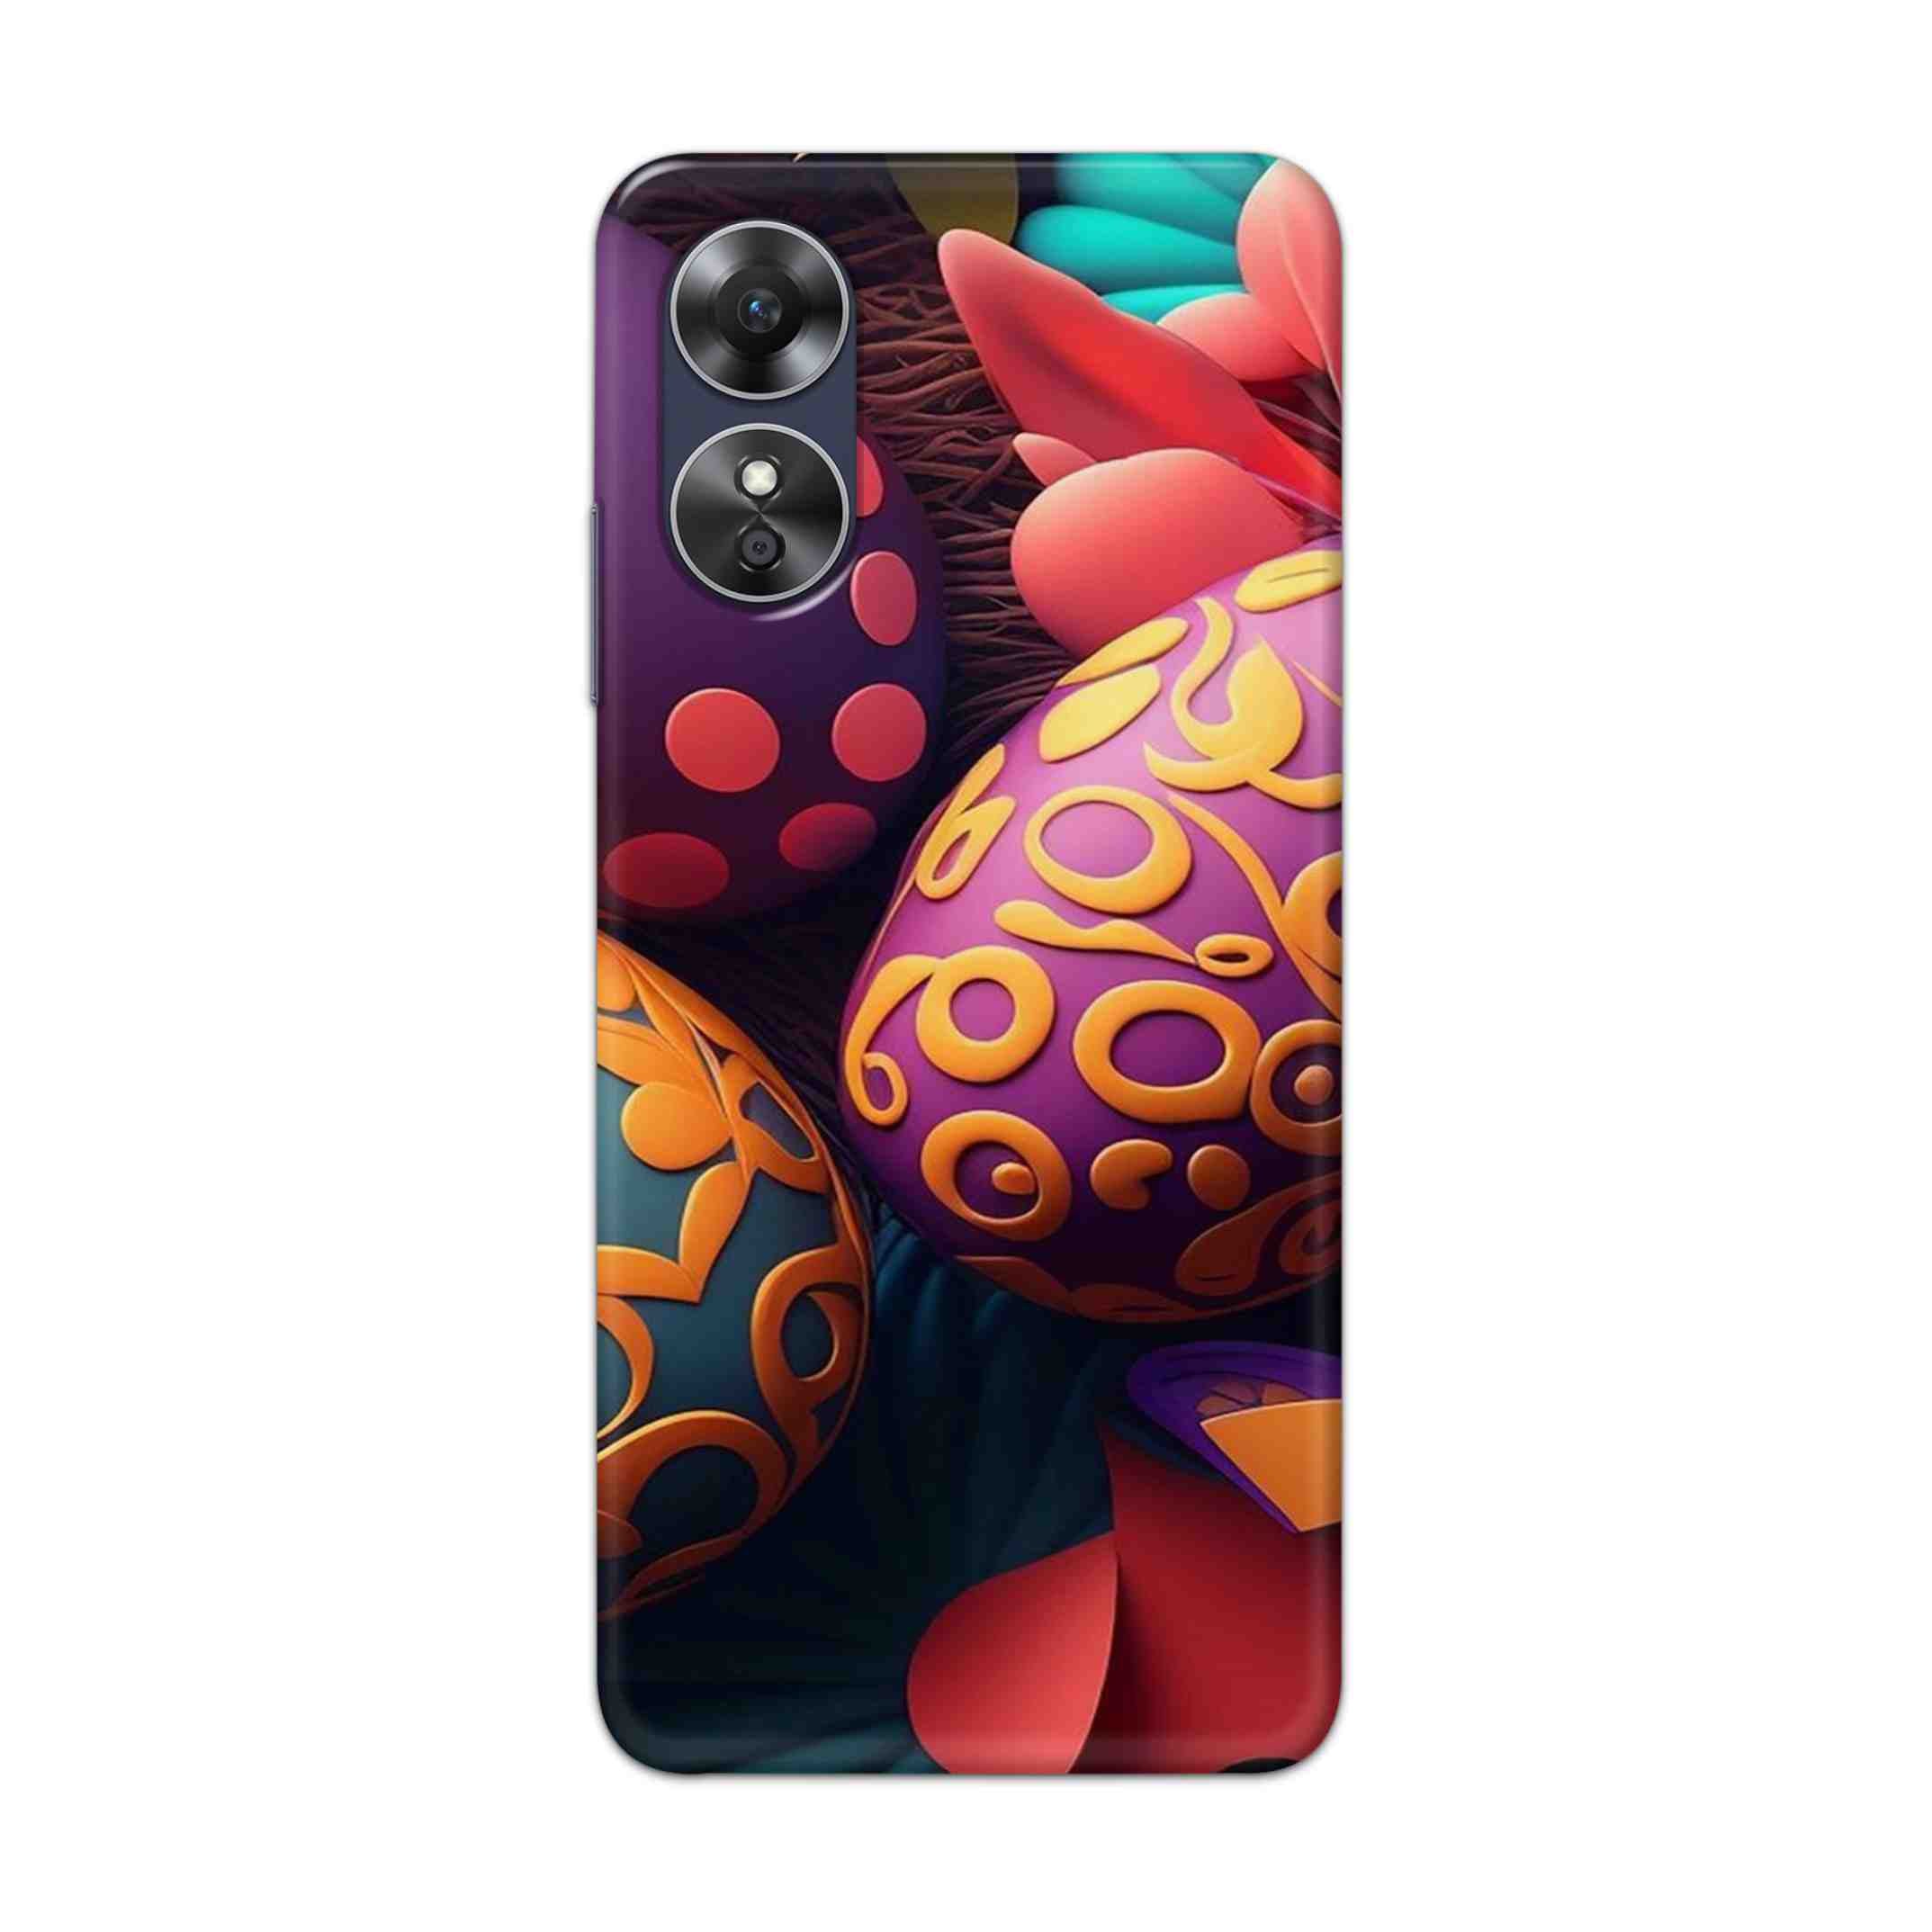 Buy Easter Egg Hard Back Mobile Phone Case Cover For Oppo A17 Online